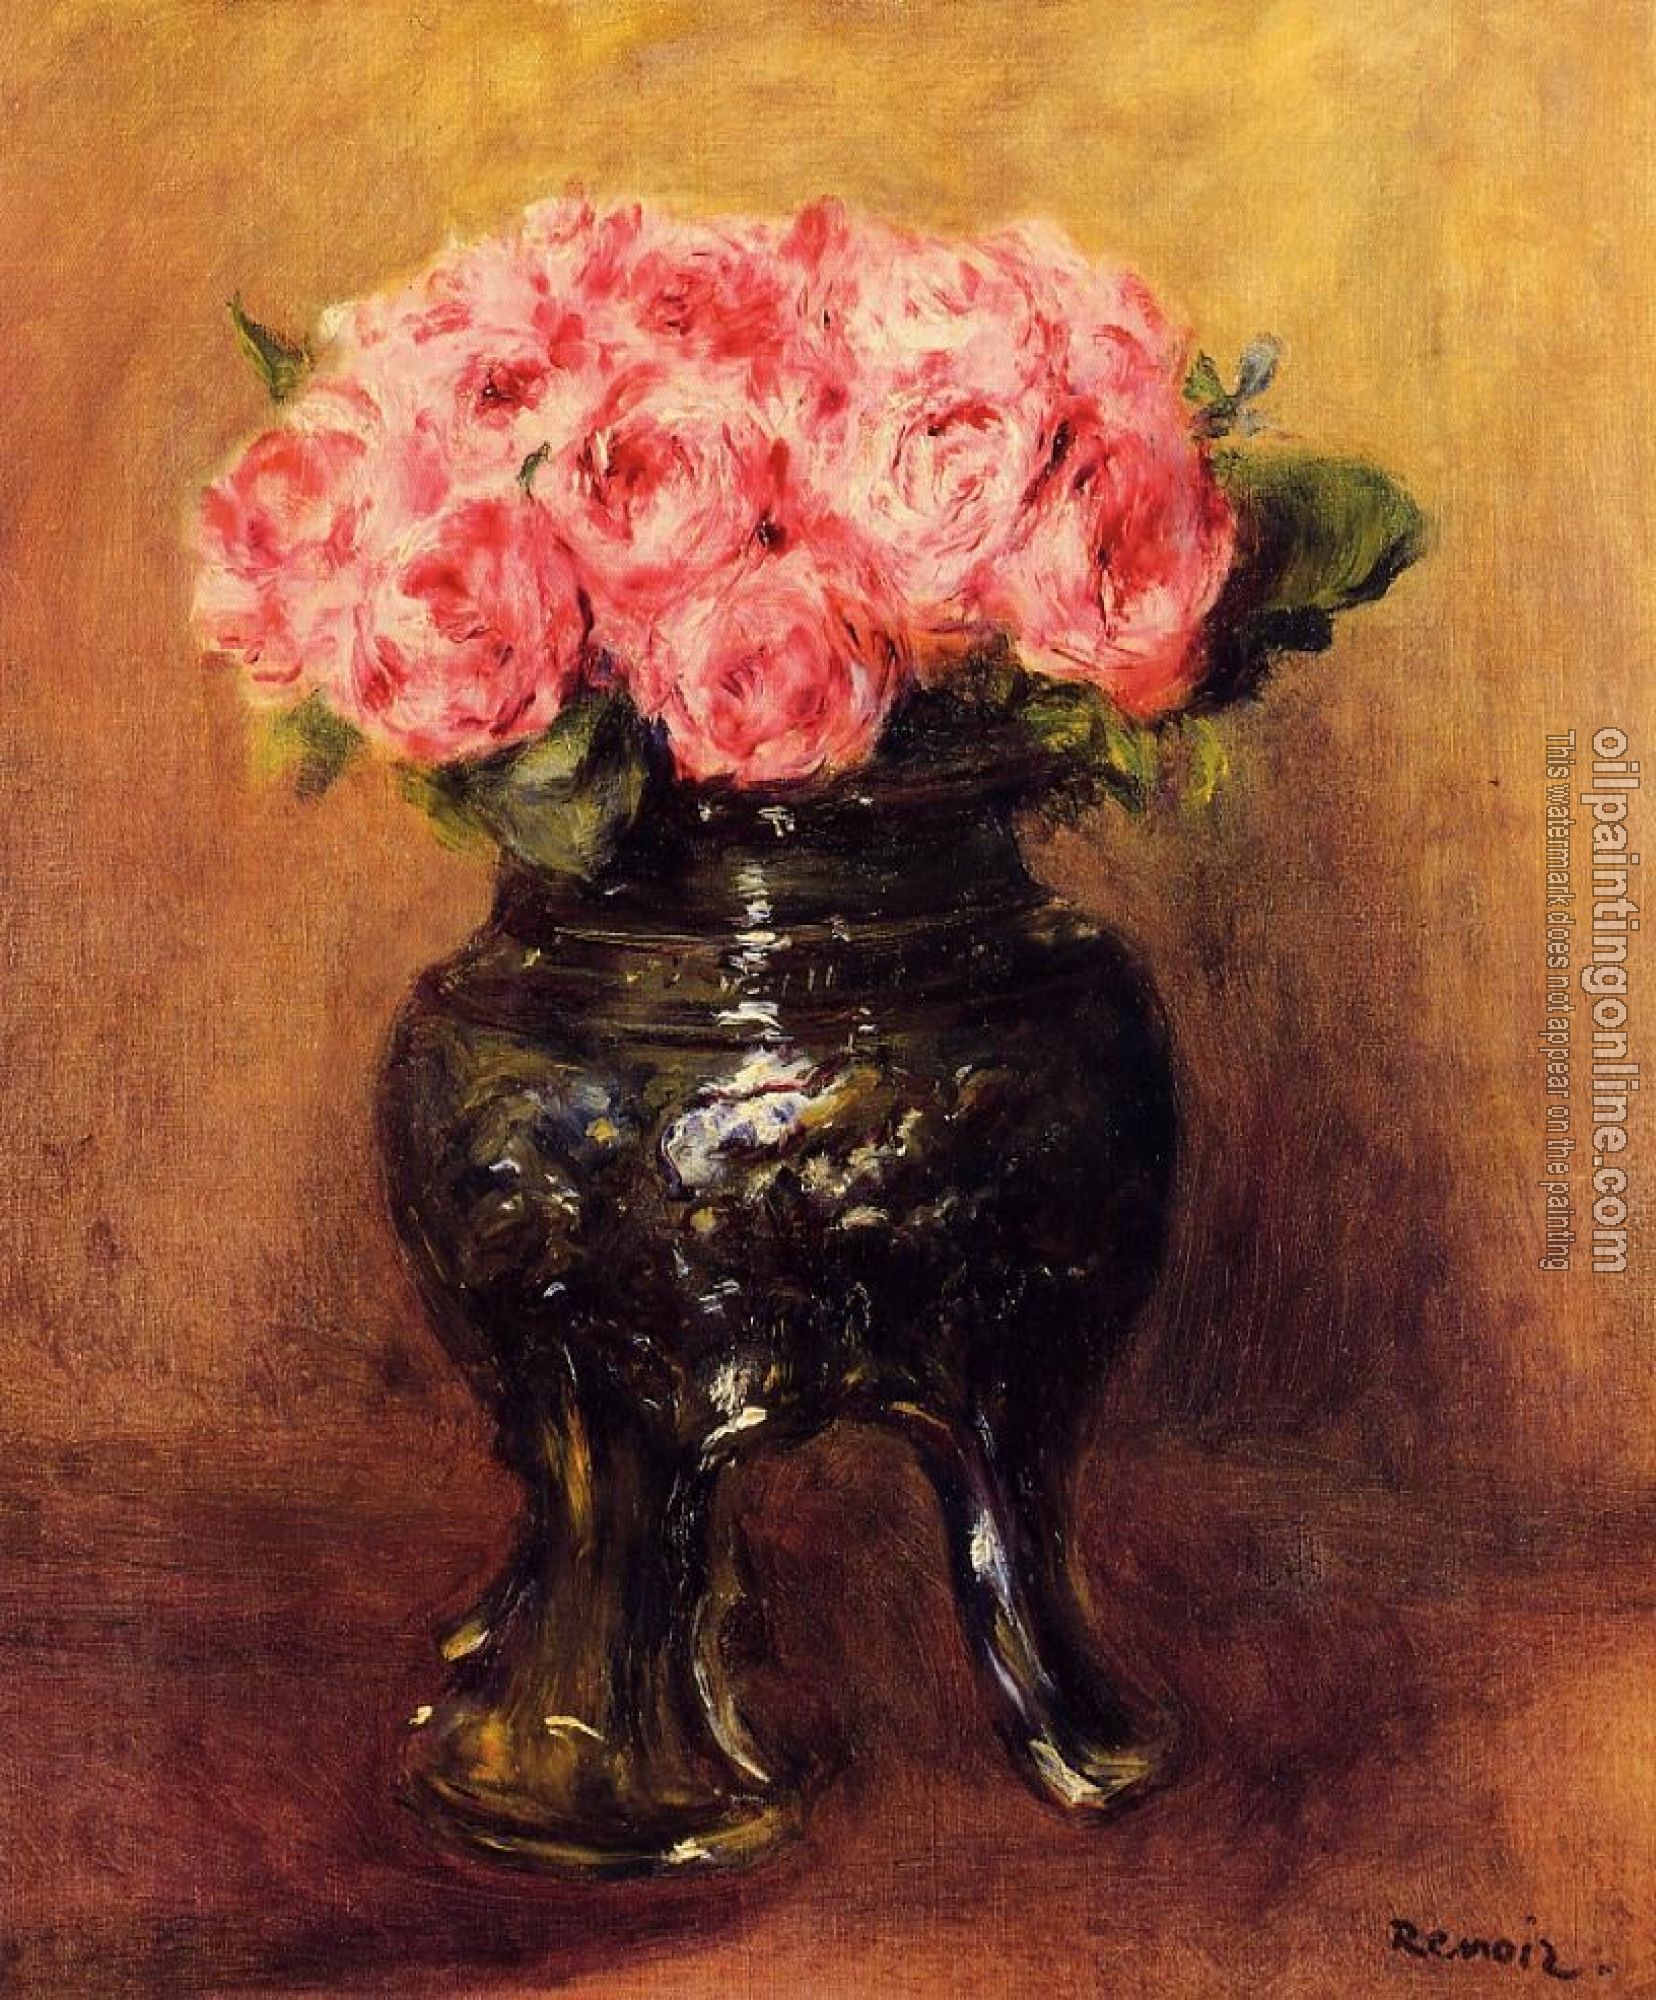 Renoir, Pierre Auguste - Roses in a China Vase